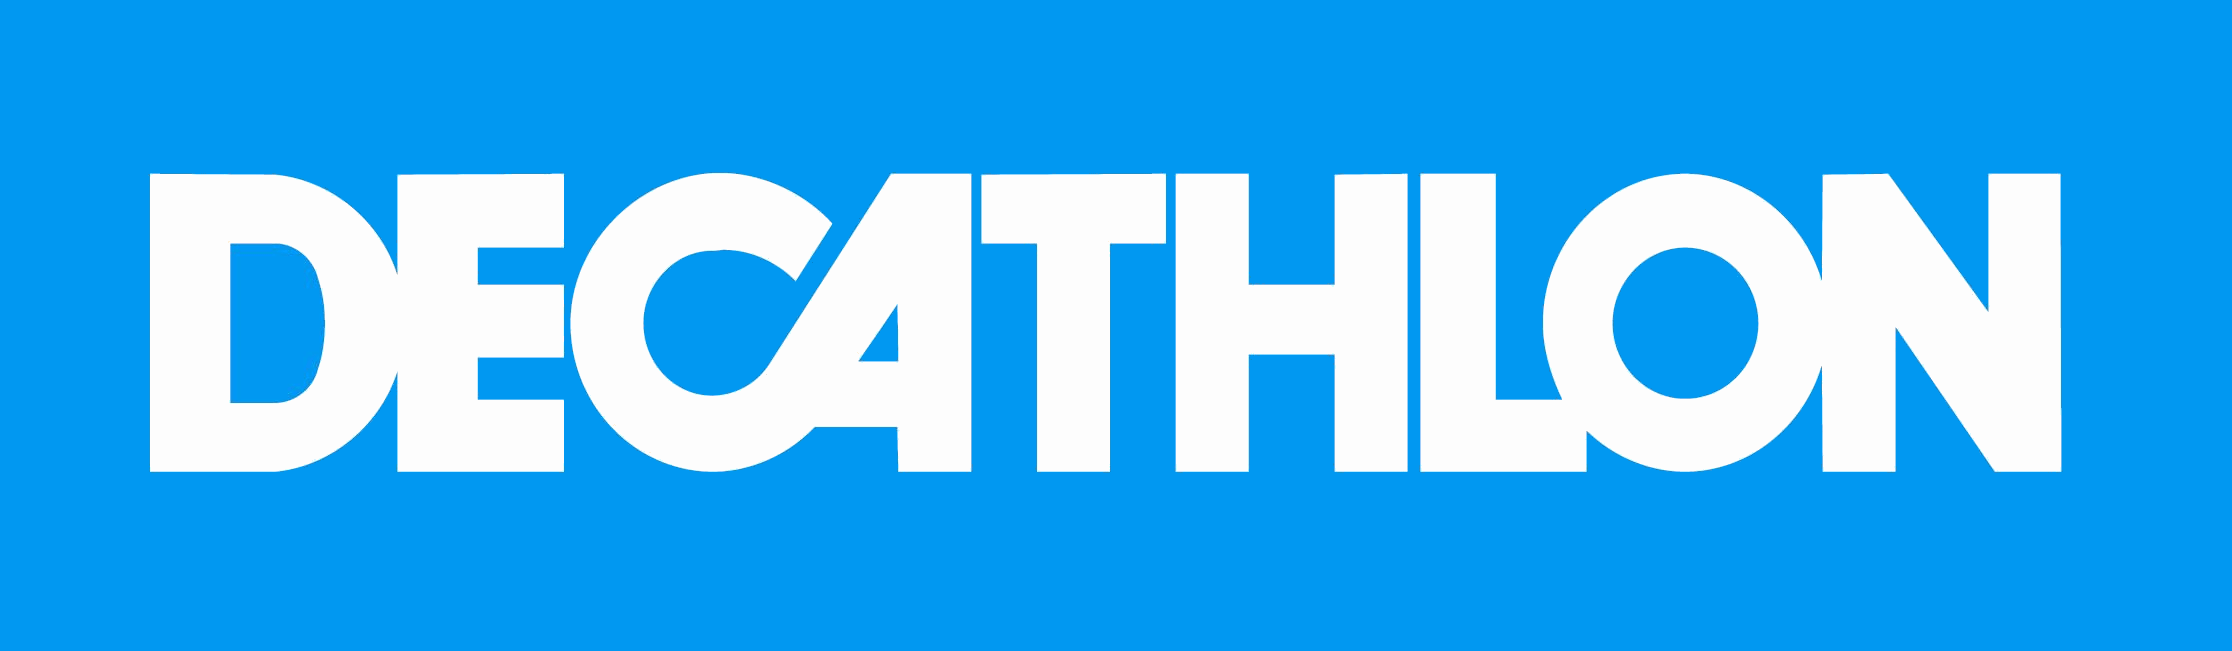 Decathlon Logo - Decathlon Logo.png